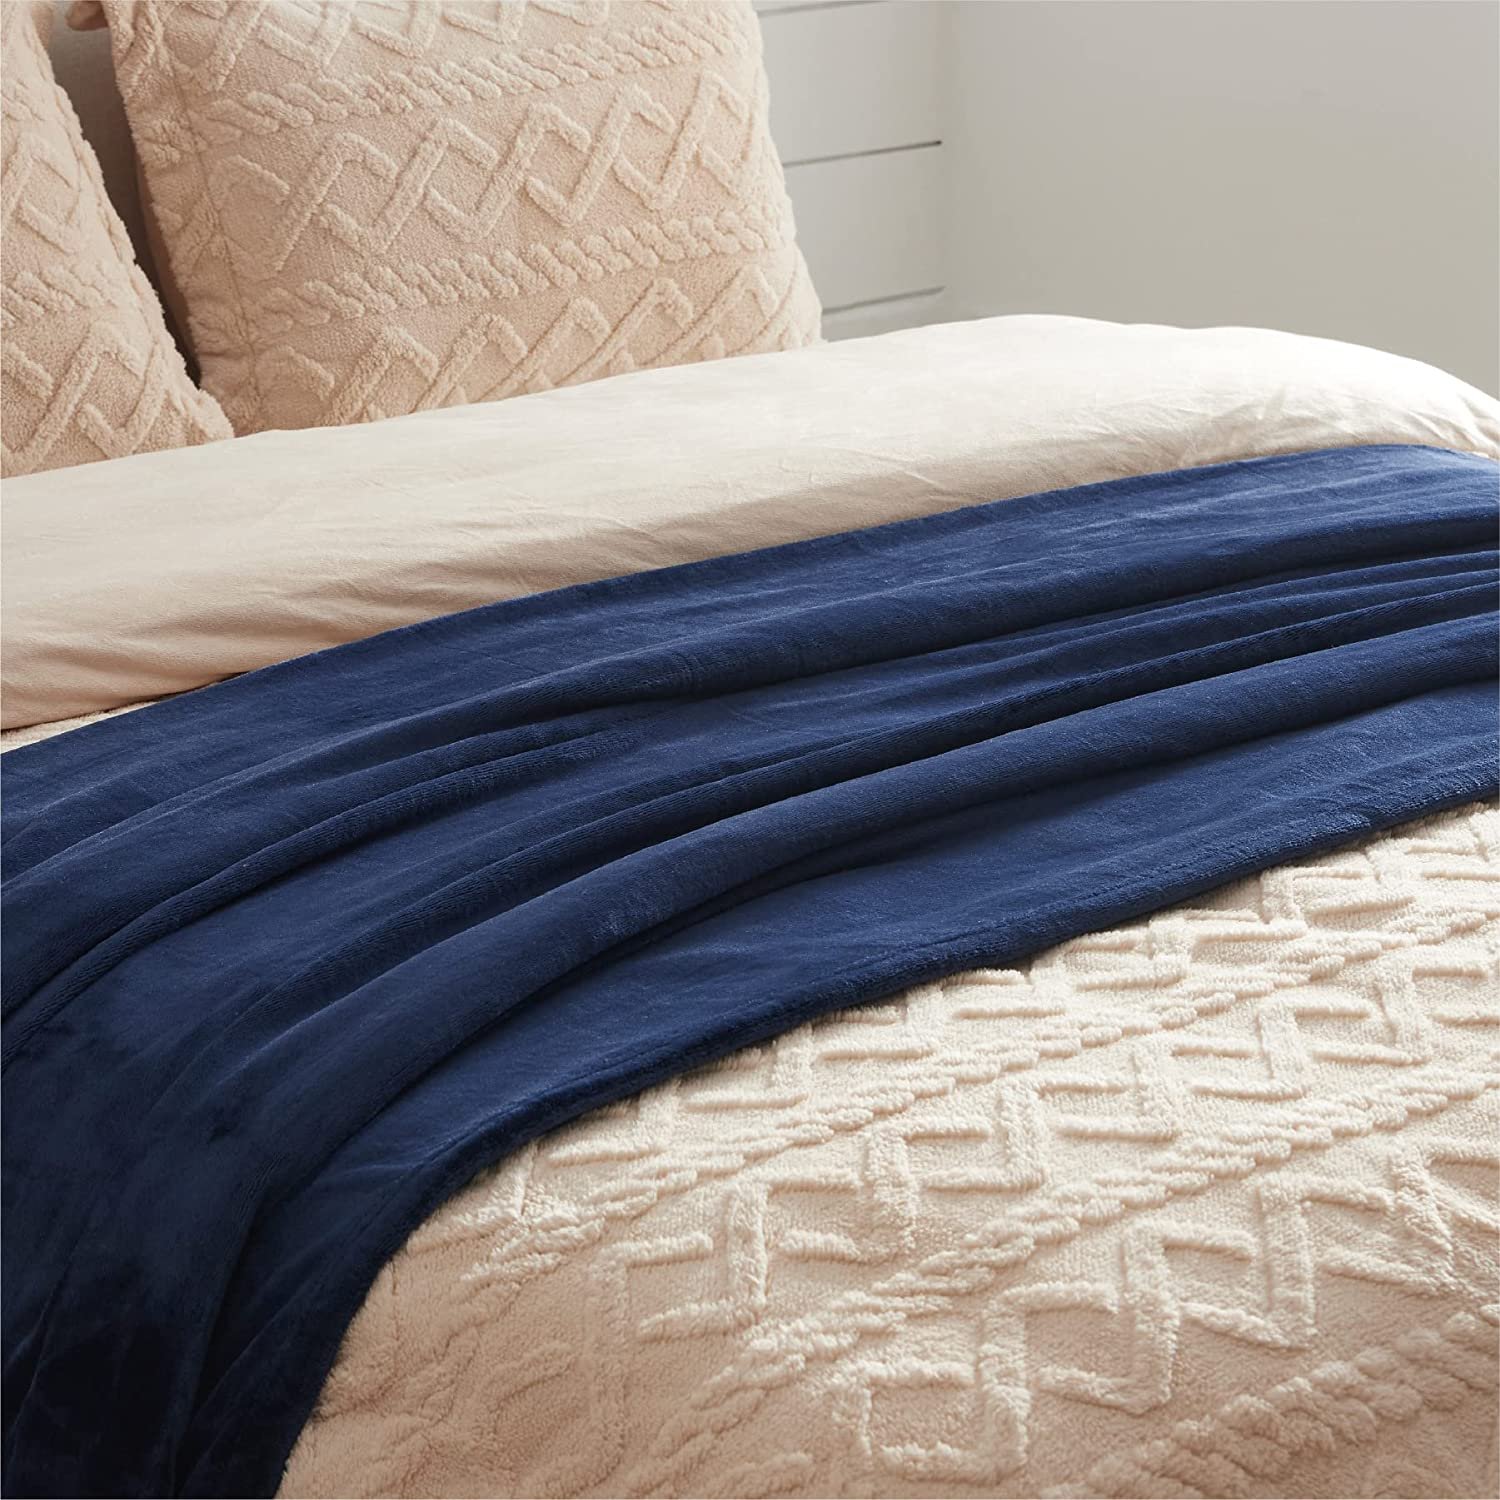  Fleece Blanket Throw Blanket - Dark Blue Lightweight Blanket for Sofa, Couch, Bed, Camping, Travel - Super Soft Cozy Microfiber Blanket